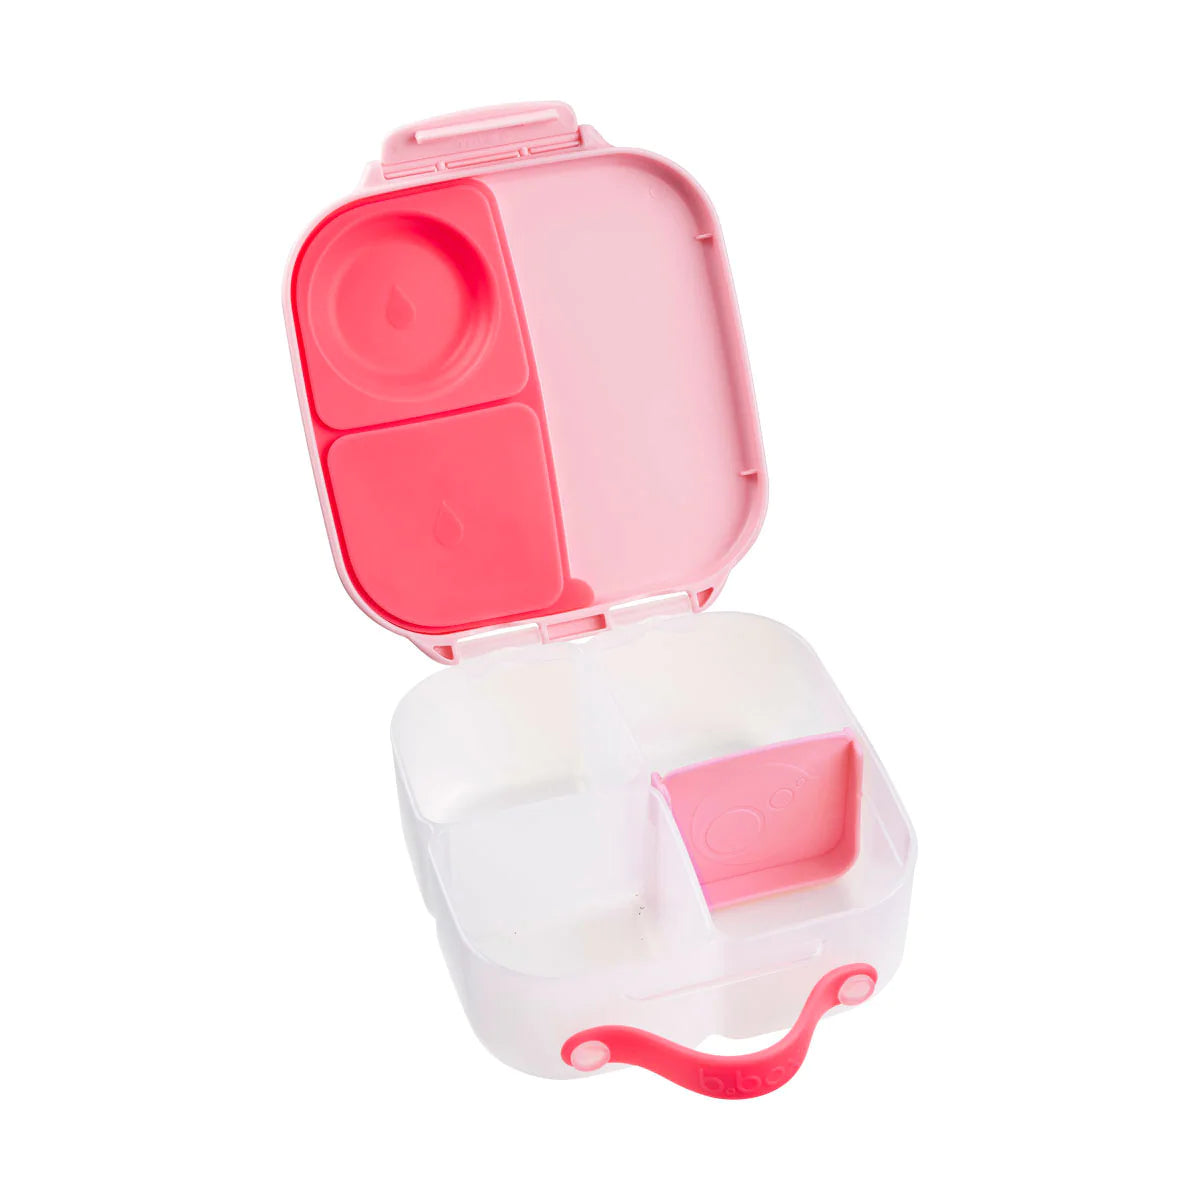 b.box Mini Lunchbox in Flamingo Fizz available at Bear & Moo